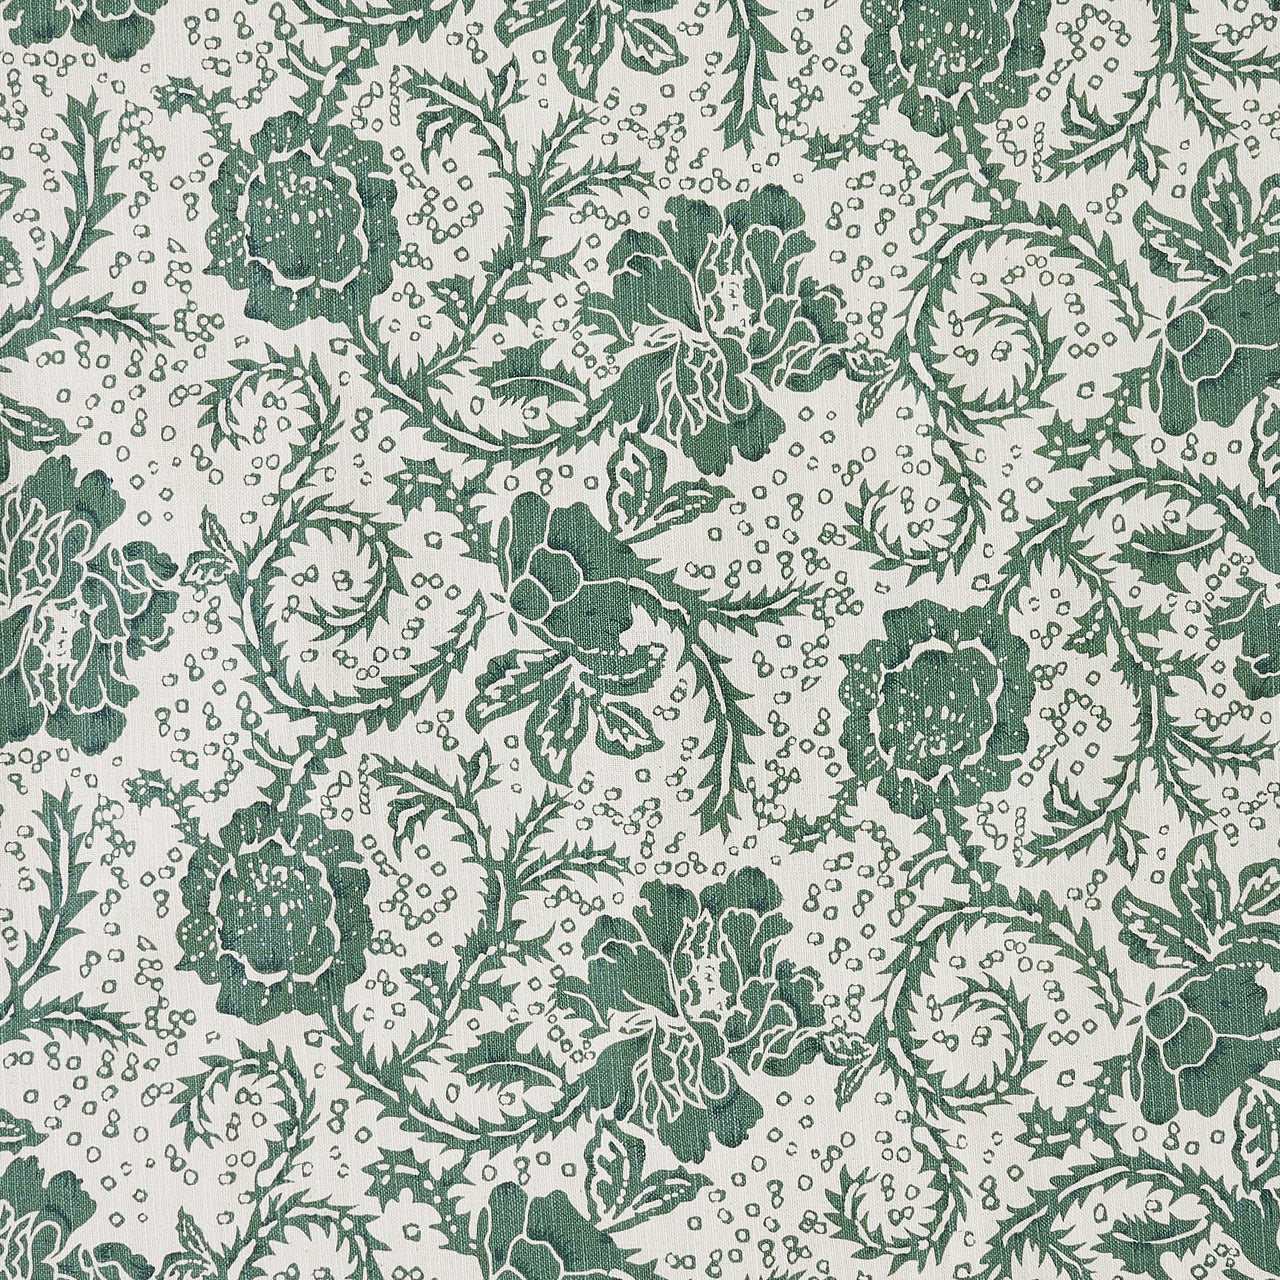 Dorset Green Floral Fabric Euro Sham 26x26 VHC Brands